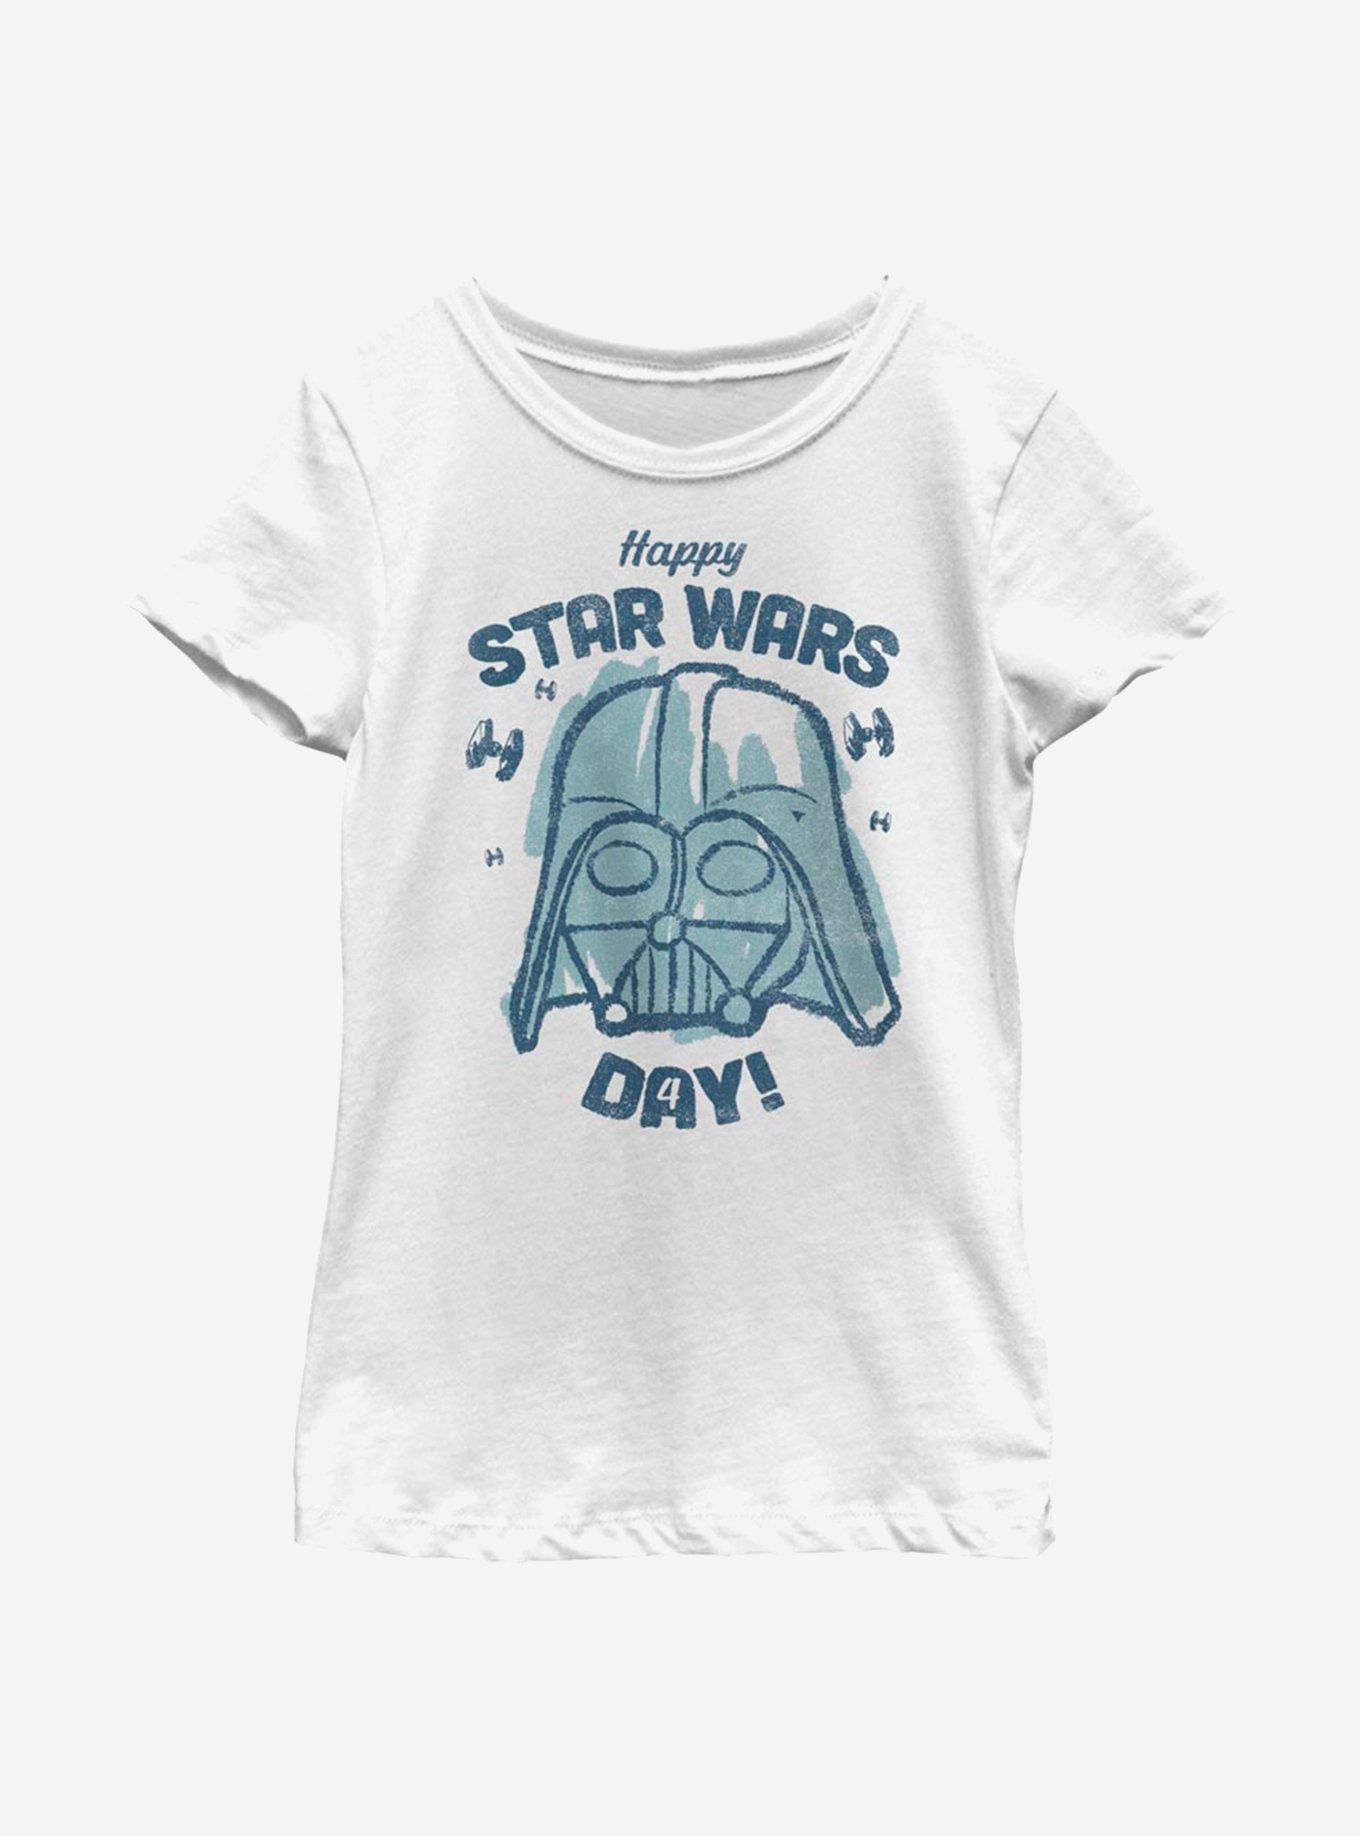 Star Wars Vader Happy Star Wars Day! Youth Girls T-Shirt, WHITE, hi-res